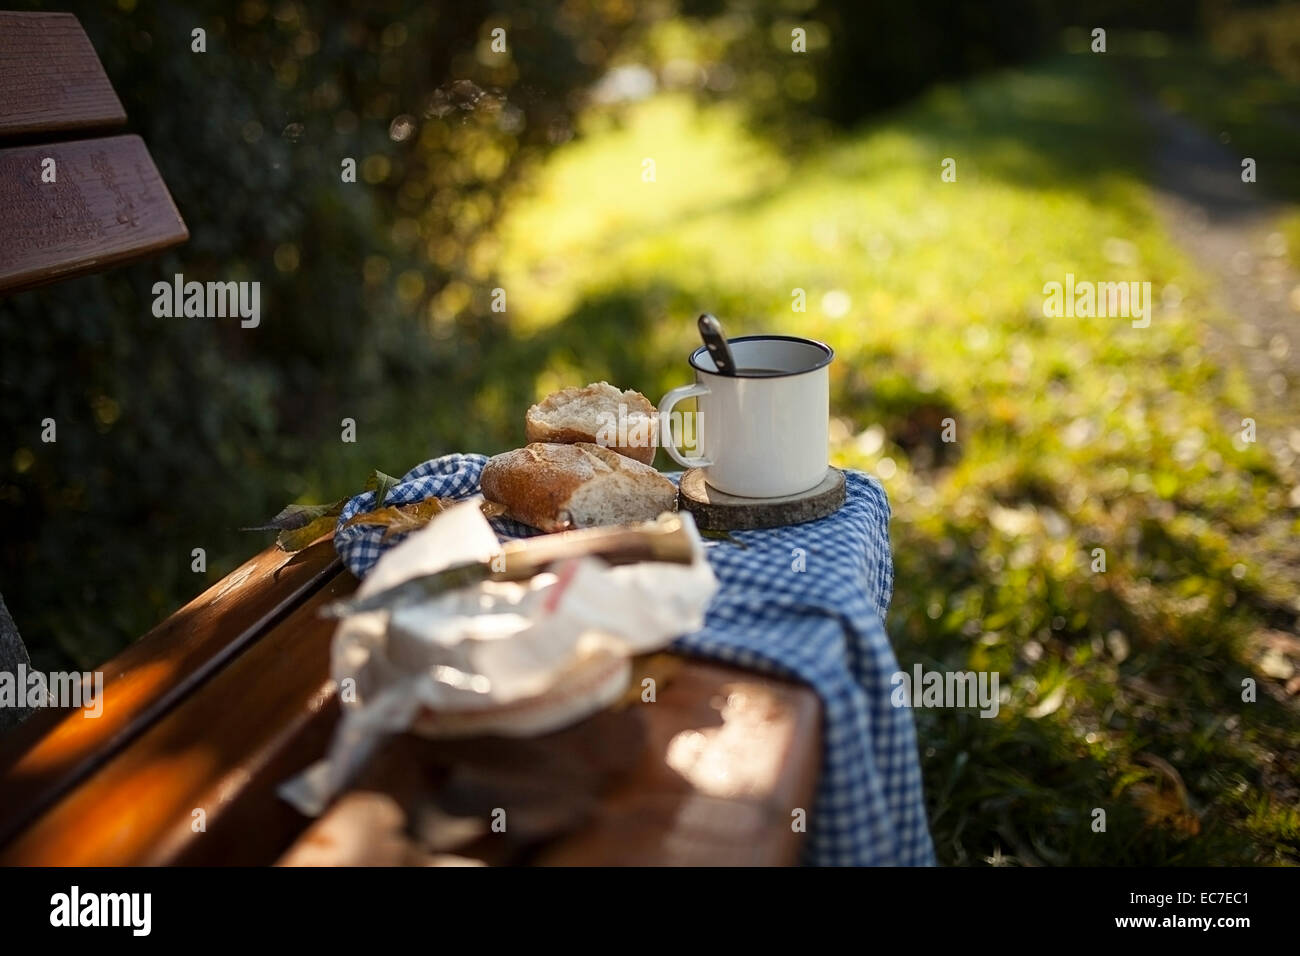 Kaffee, Brot, Käse und Herbst Blätter auf Holzbank Stockfoto